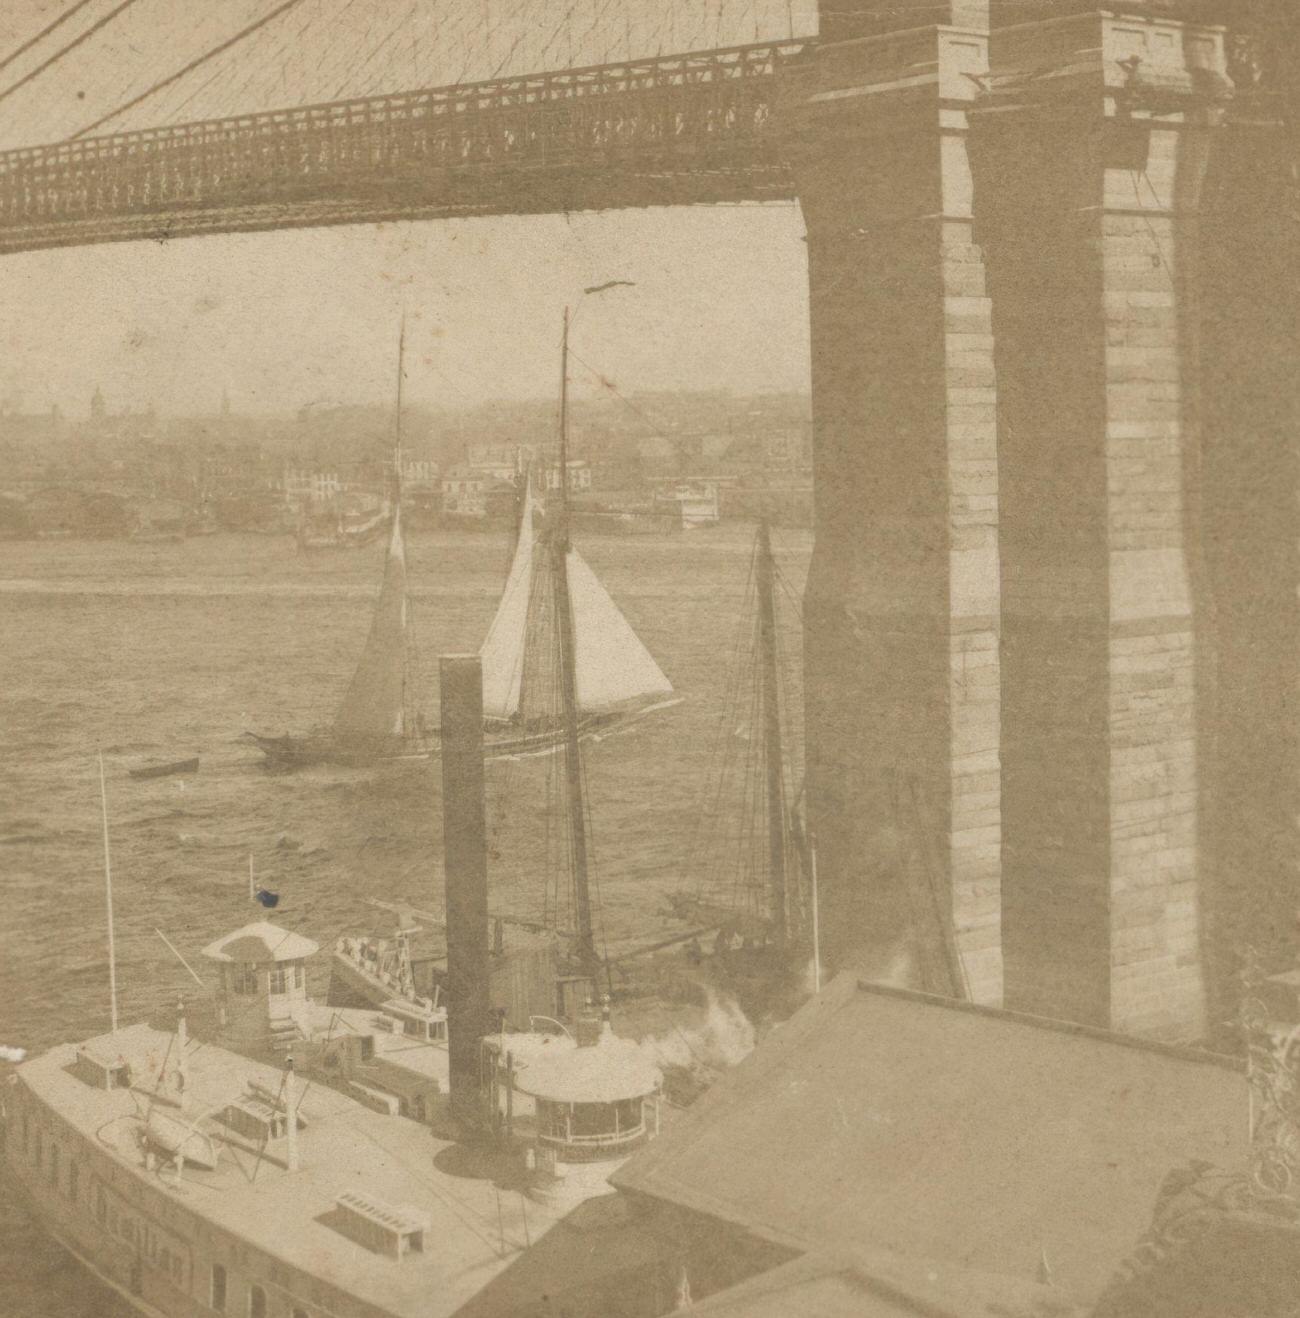 Suspension Bridge, Now Known As Brooklyn Bridge, 1901